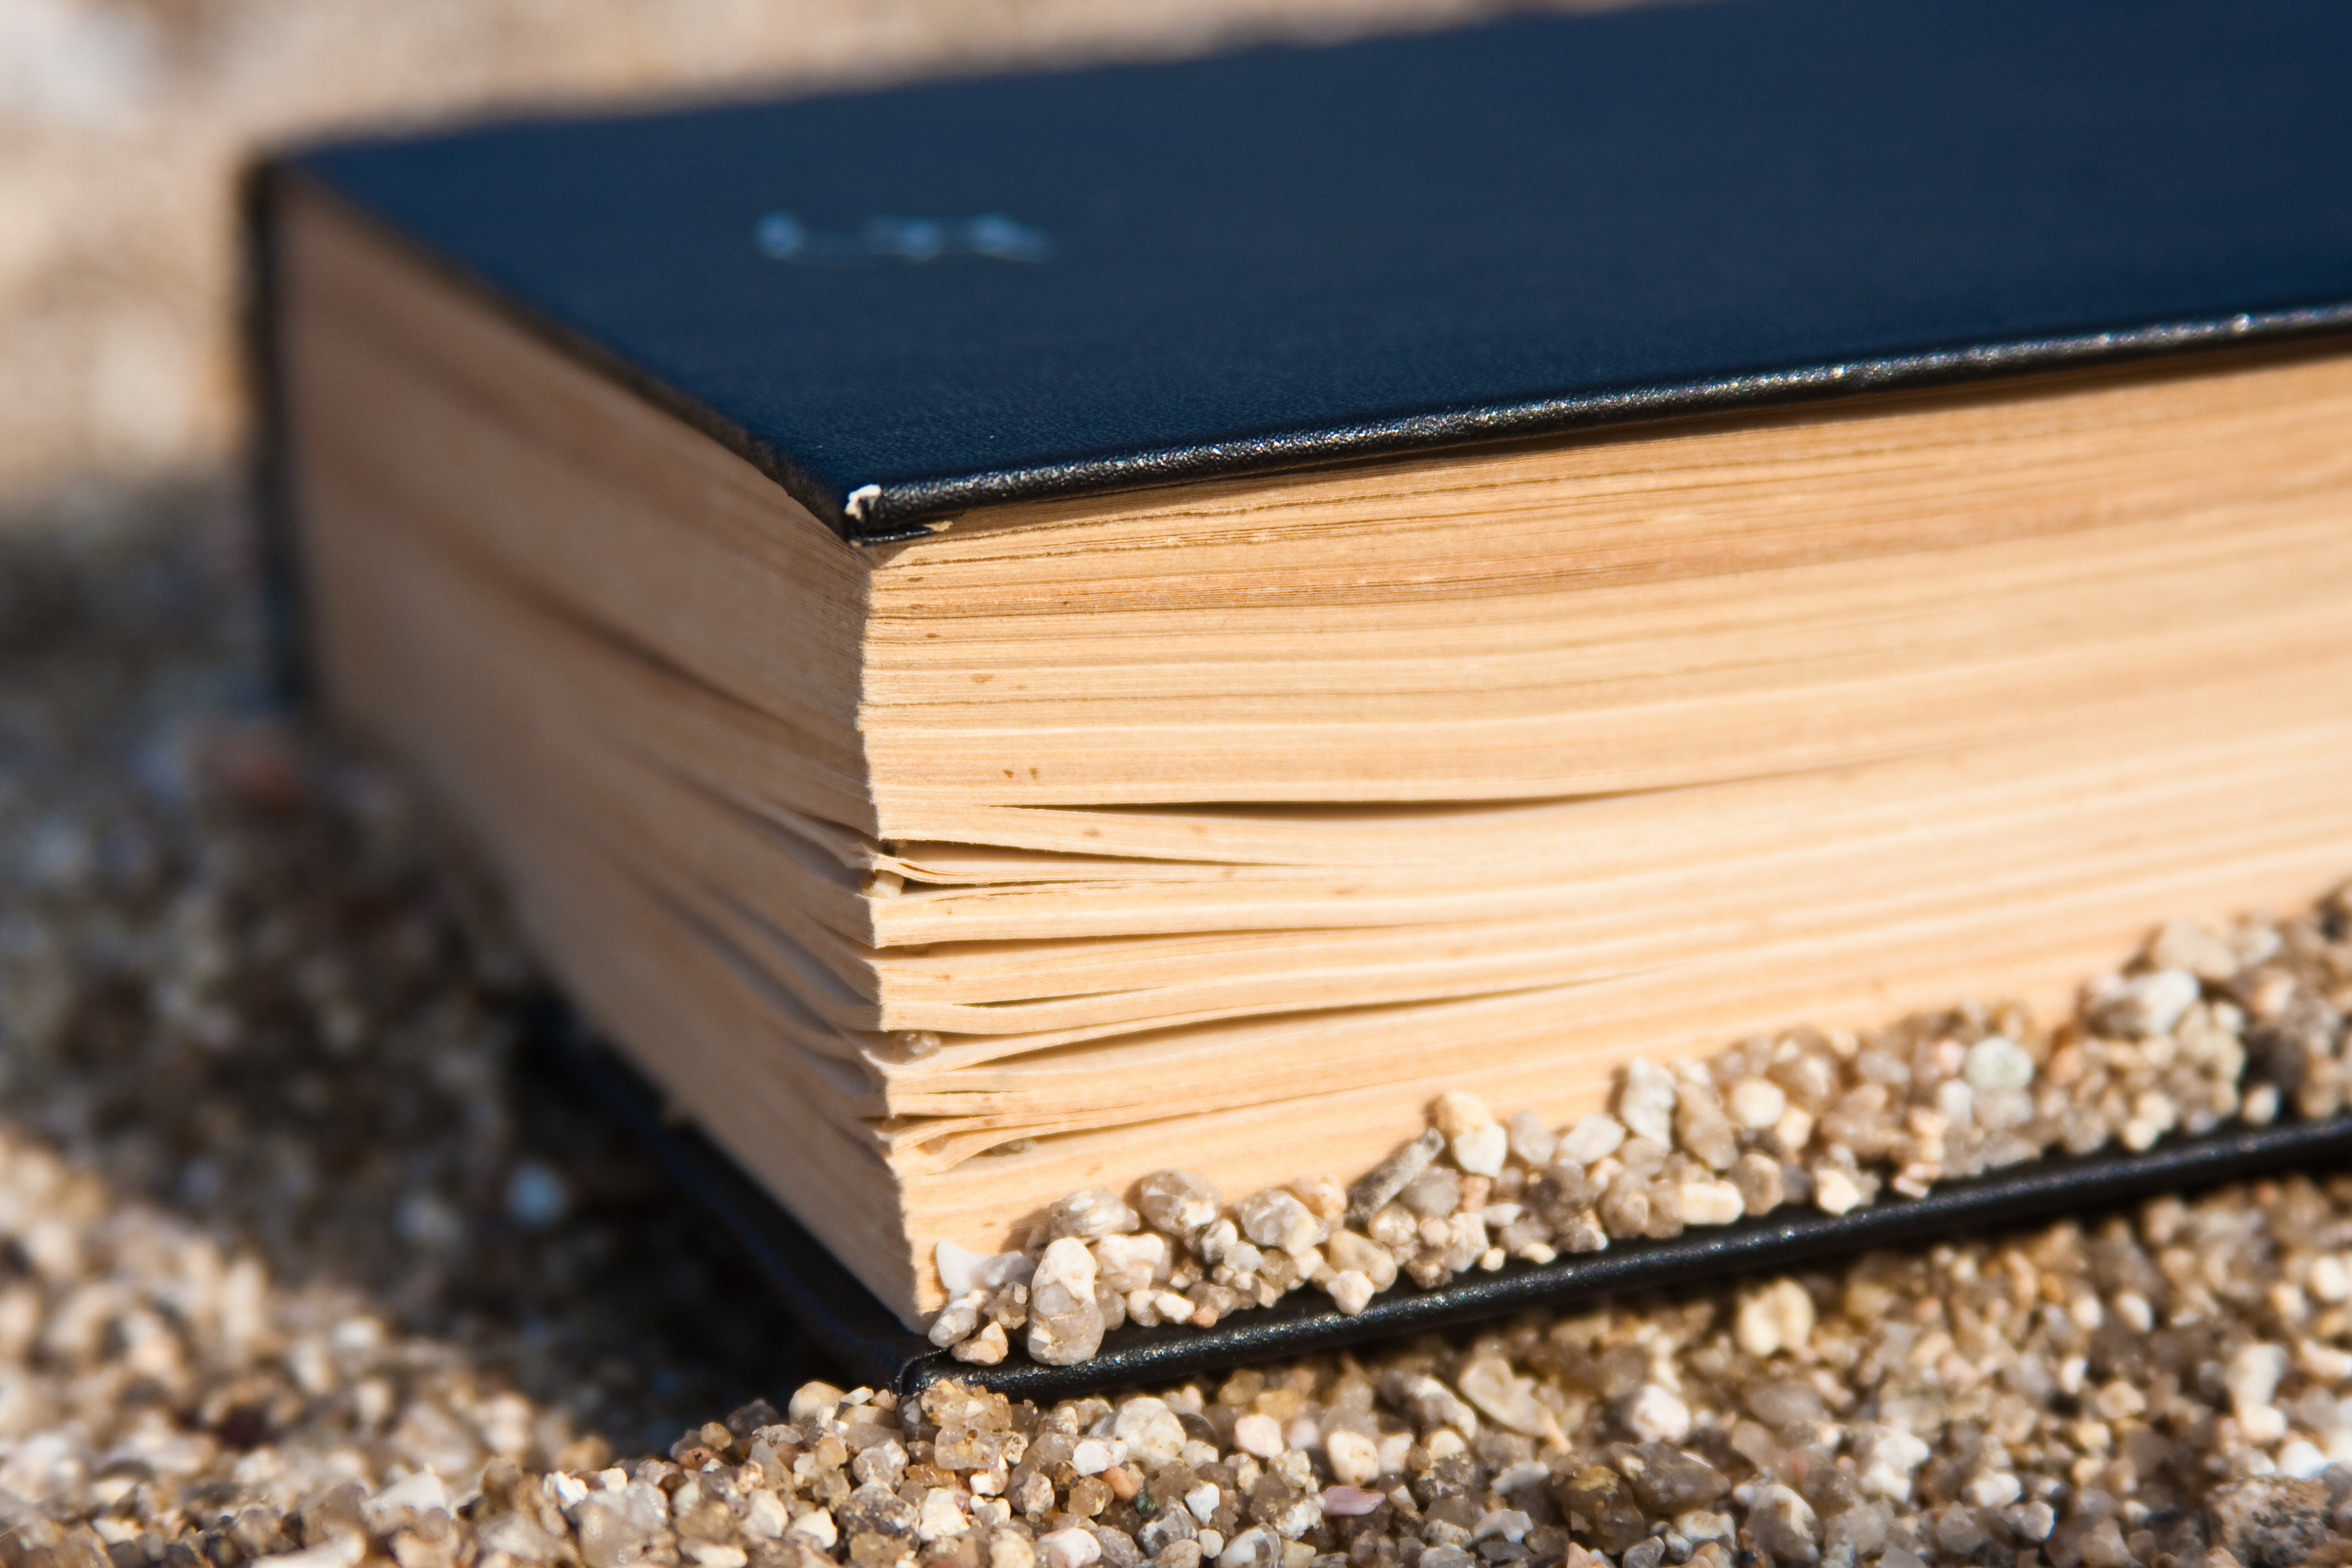 A book to read on holidays. Книга на песке. Книга на пляже. Книга на песке песок. Раскрытая книга на песке.